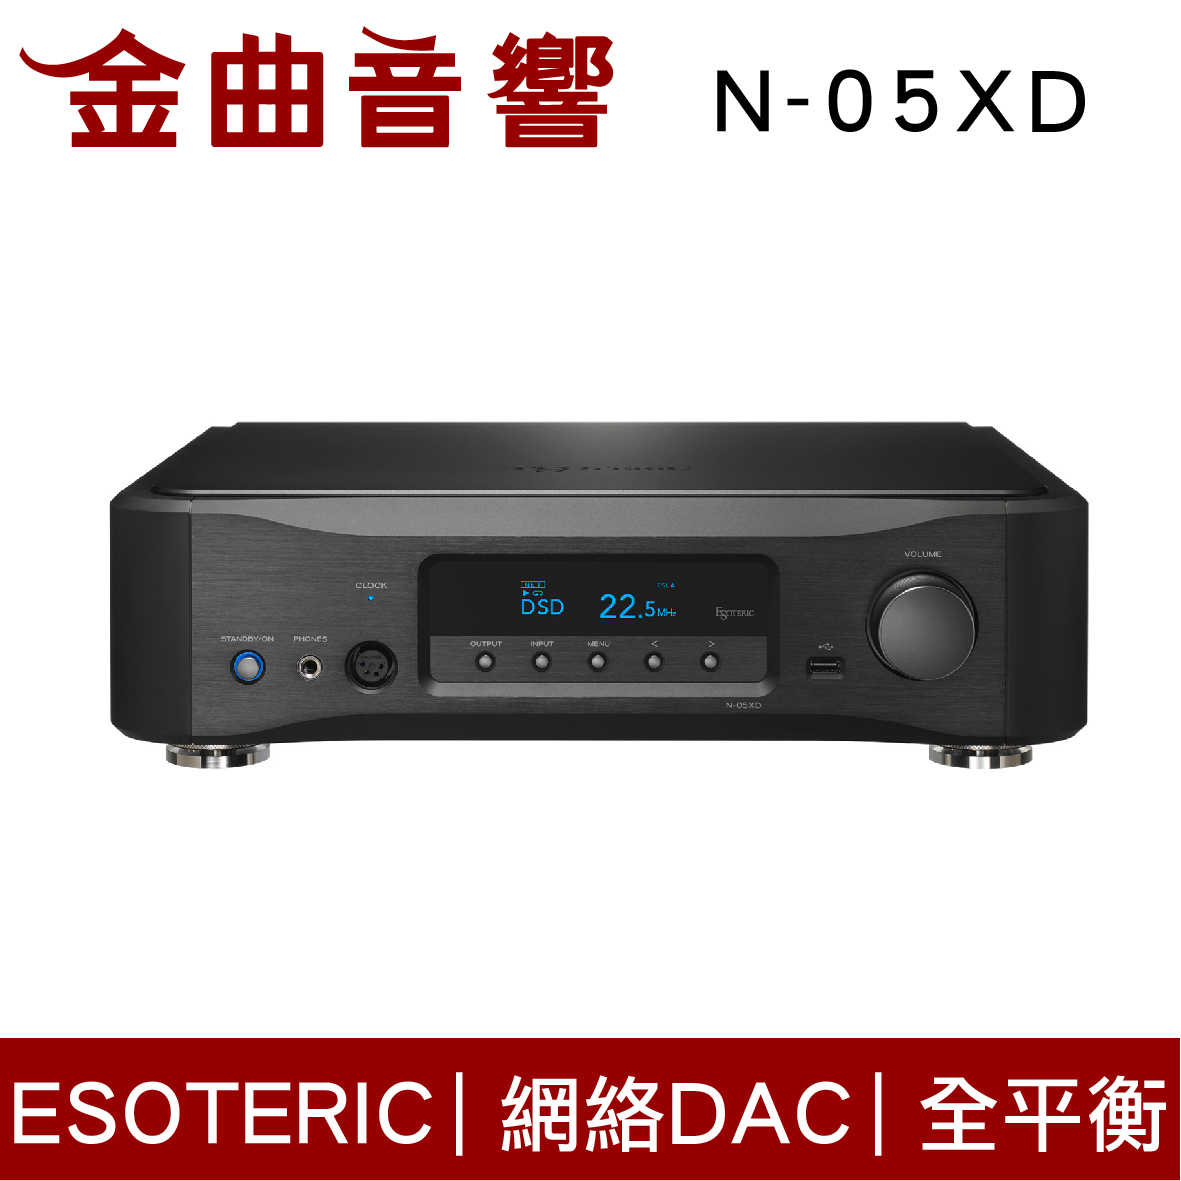 ESOTERIC N-05XD DAC 黑色 網路串流 聲道獨立 耳擴 | 金曲音響